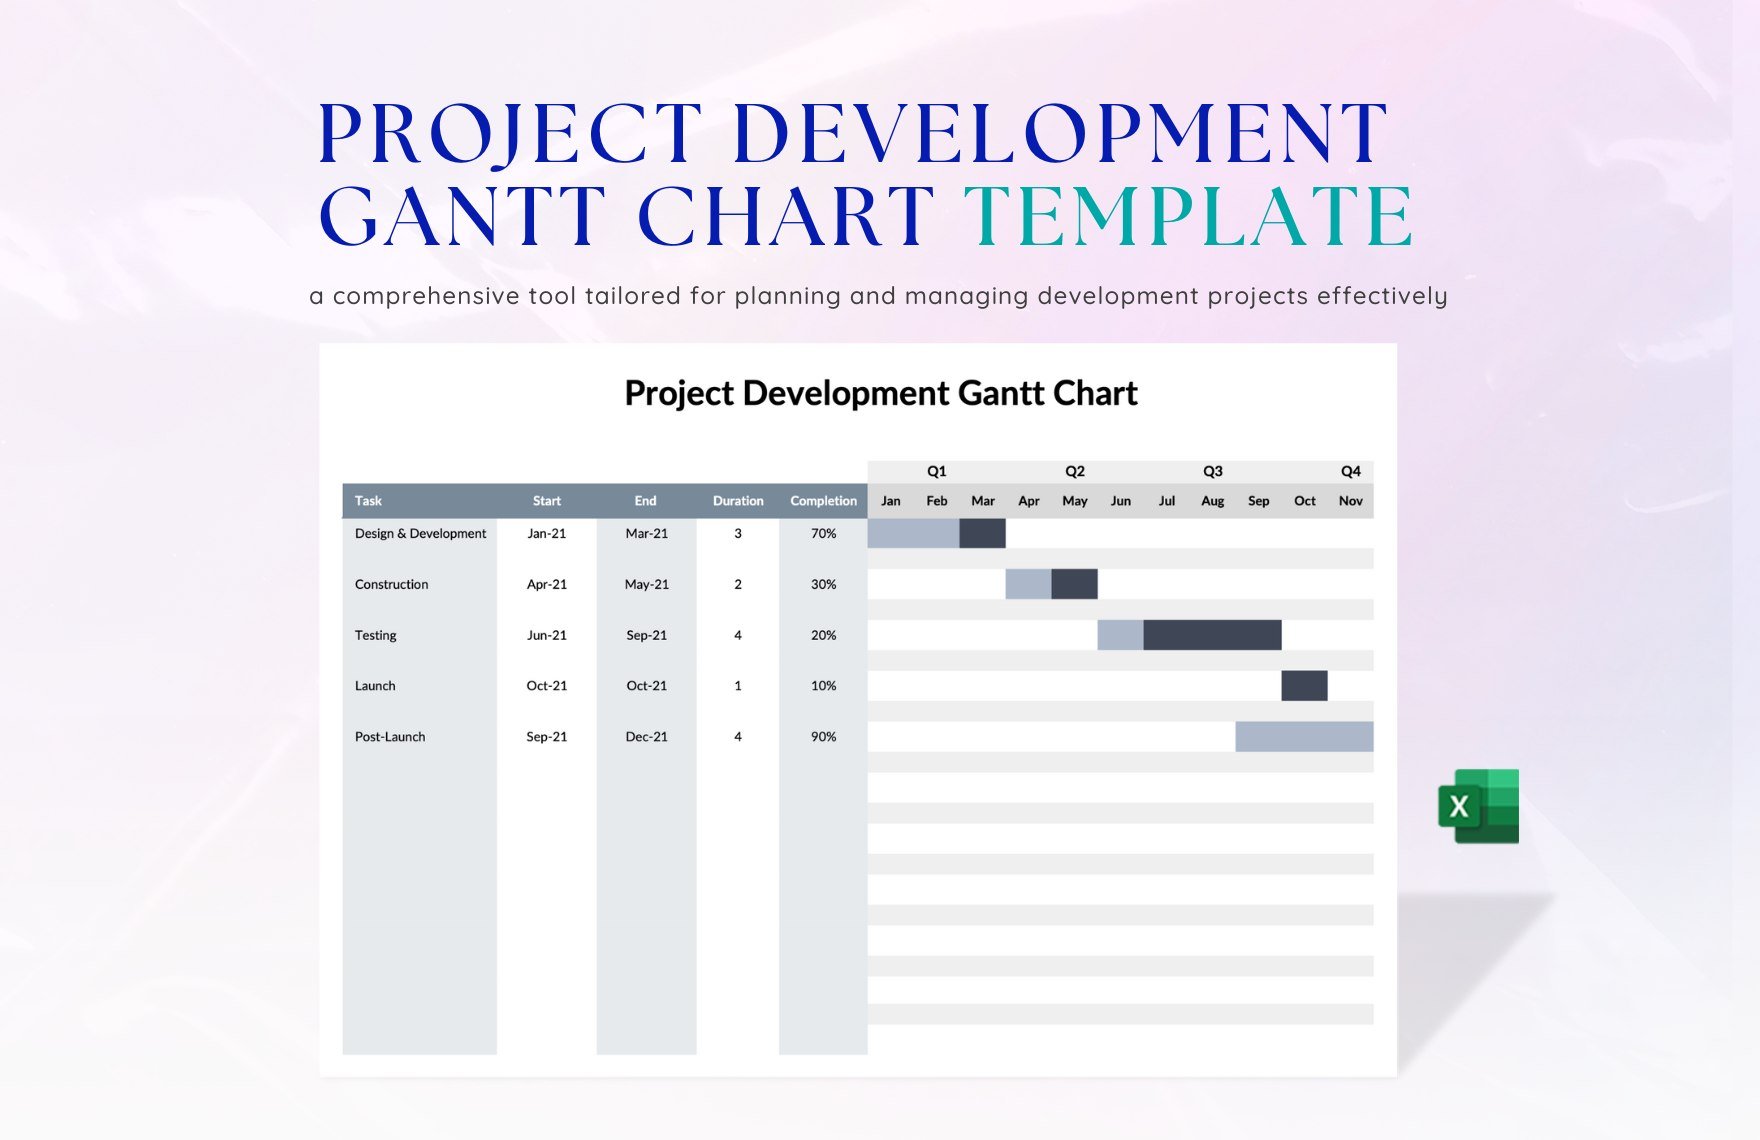 Project Development Gantt Chart Template in Excel